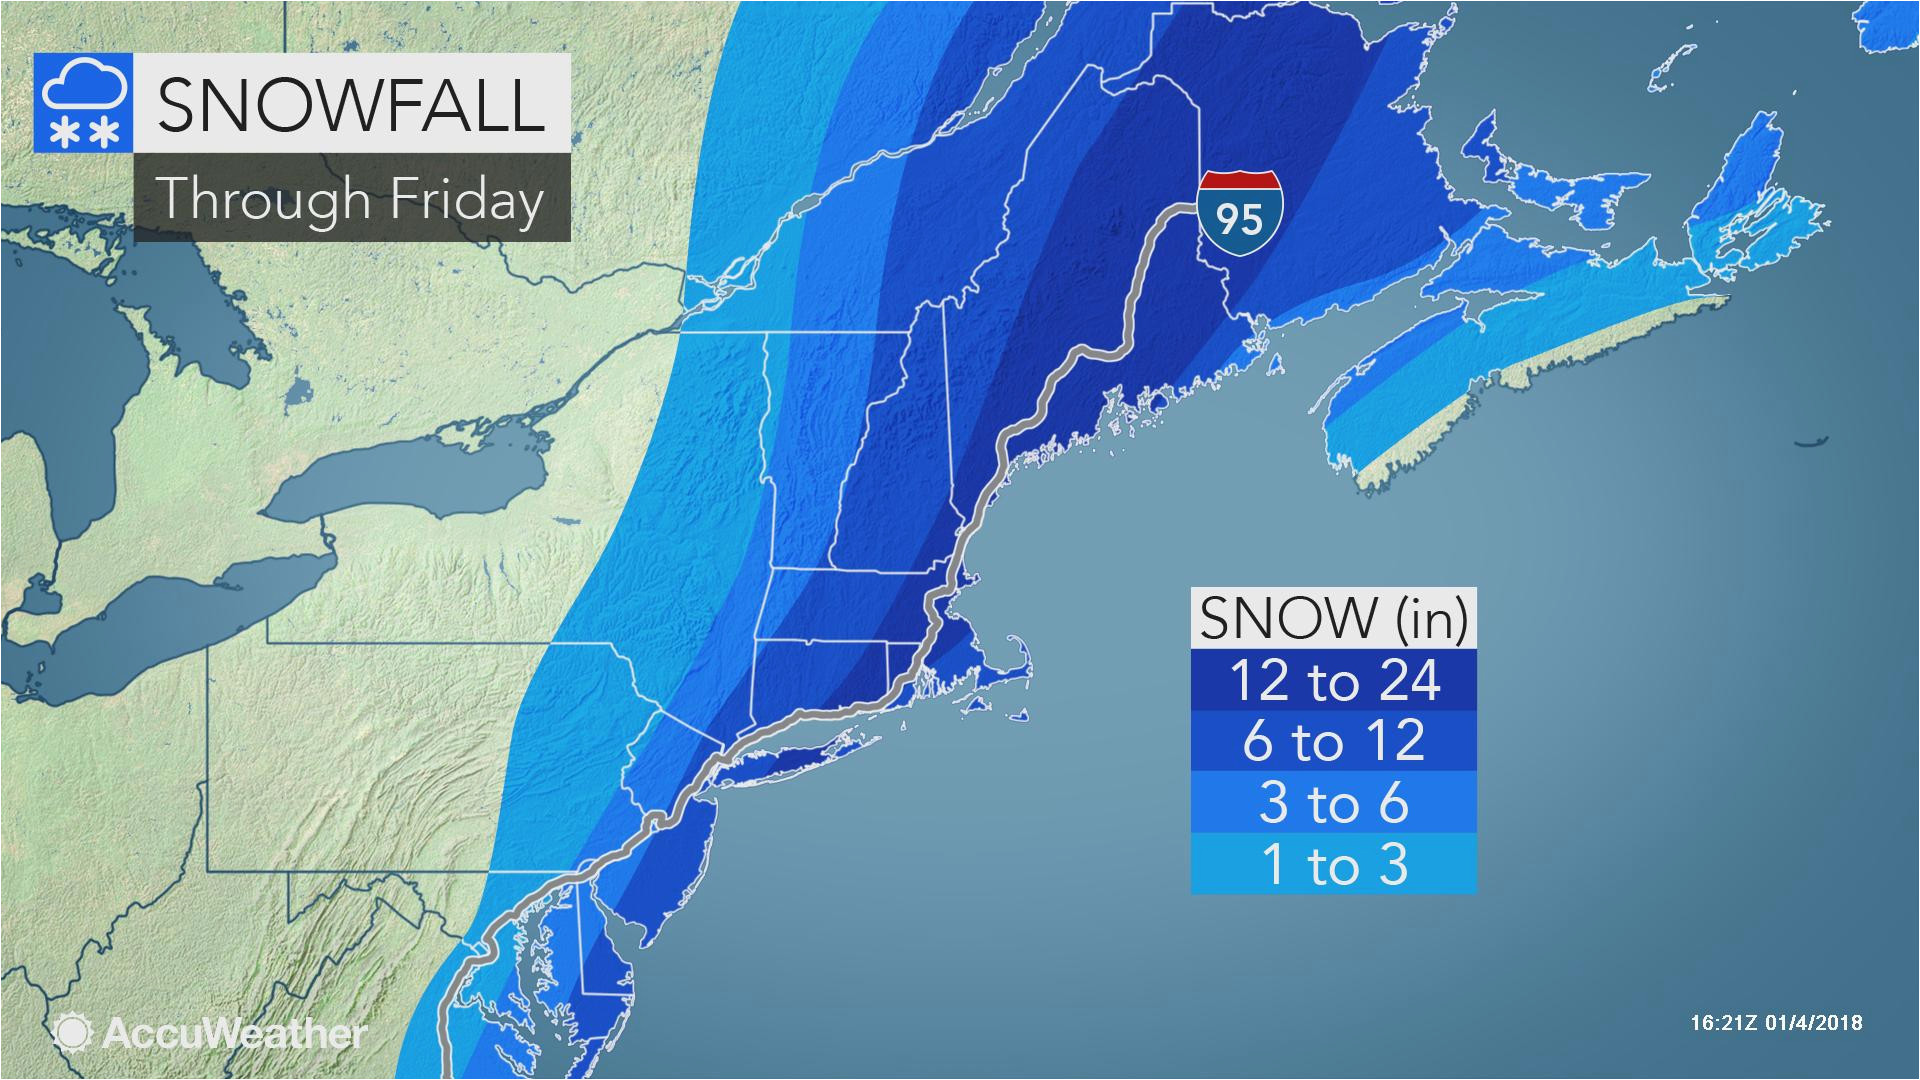 Snowfall Map New England Snowstorm Pounds Mid atlantic Eyes New England as A Blizzard